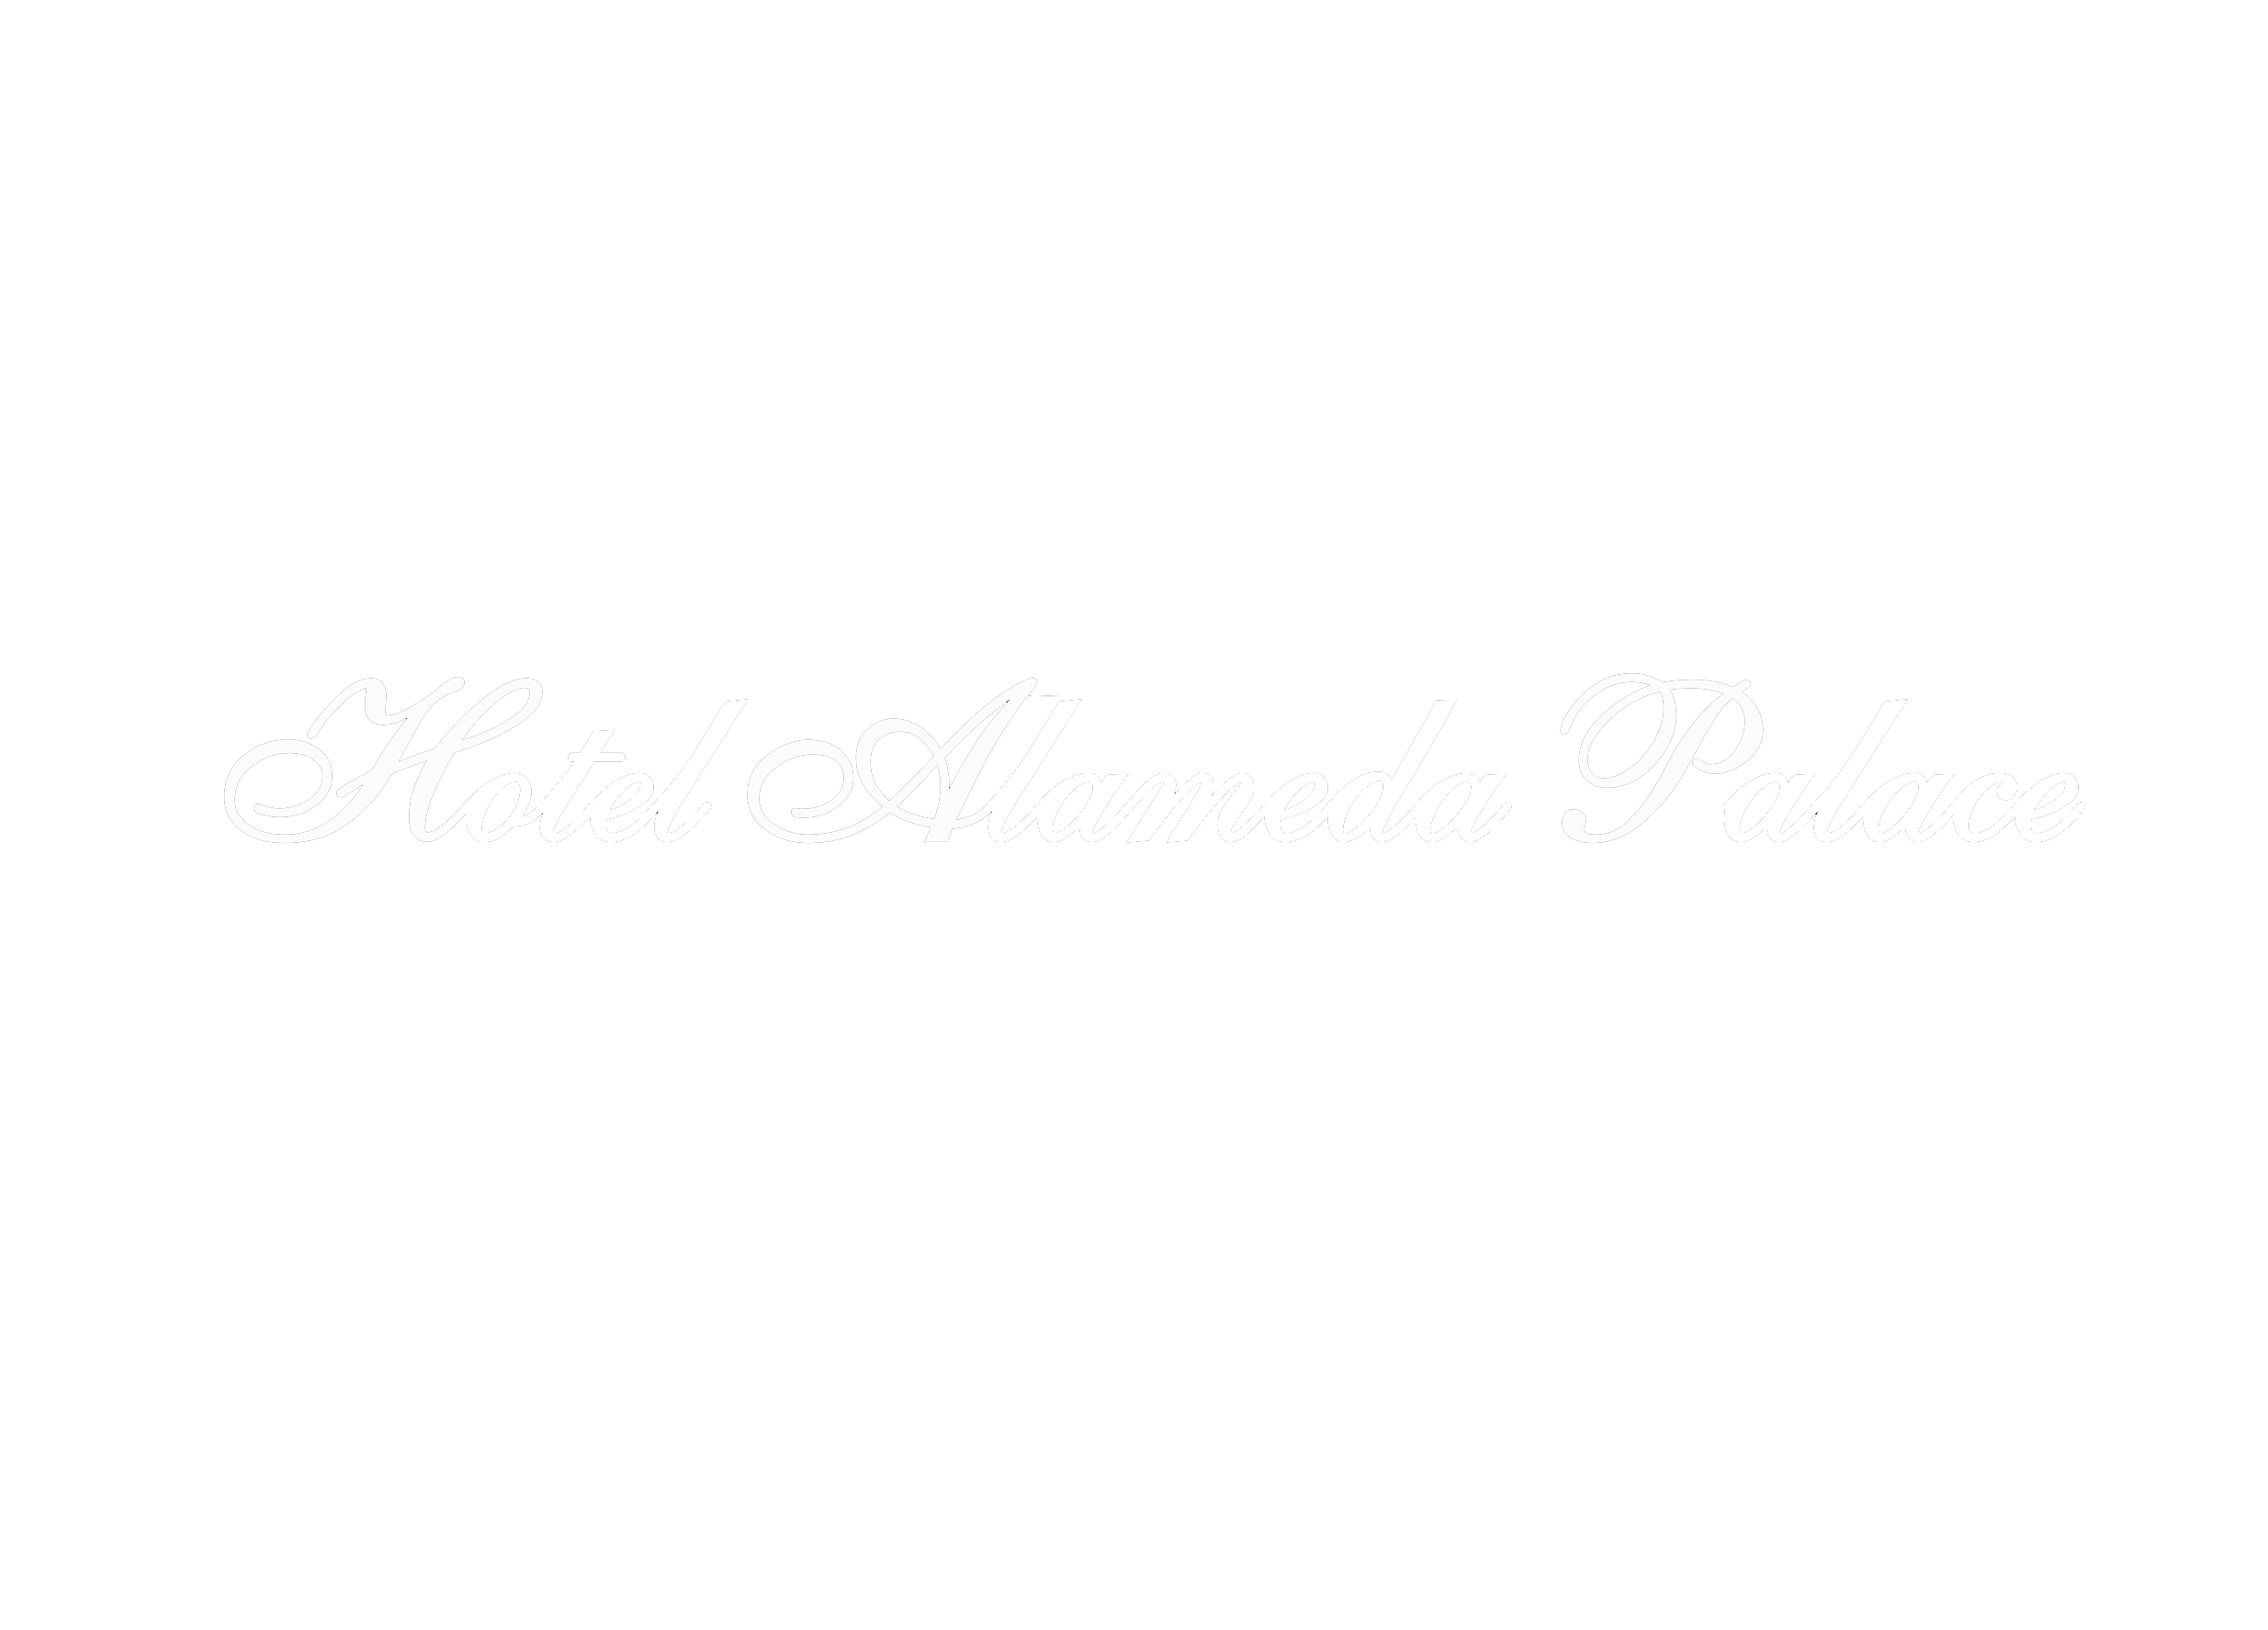 Alameda palace